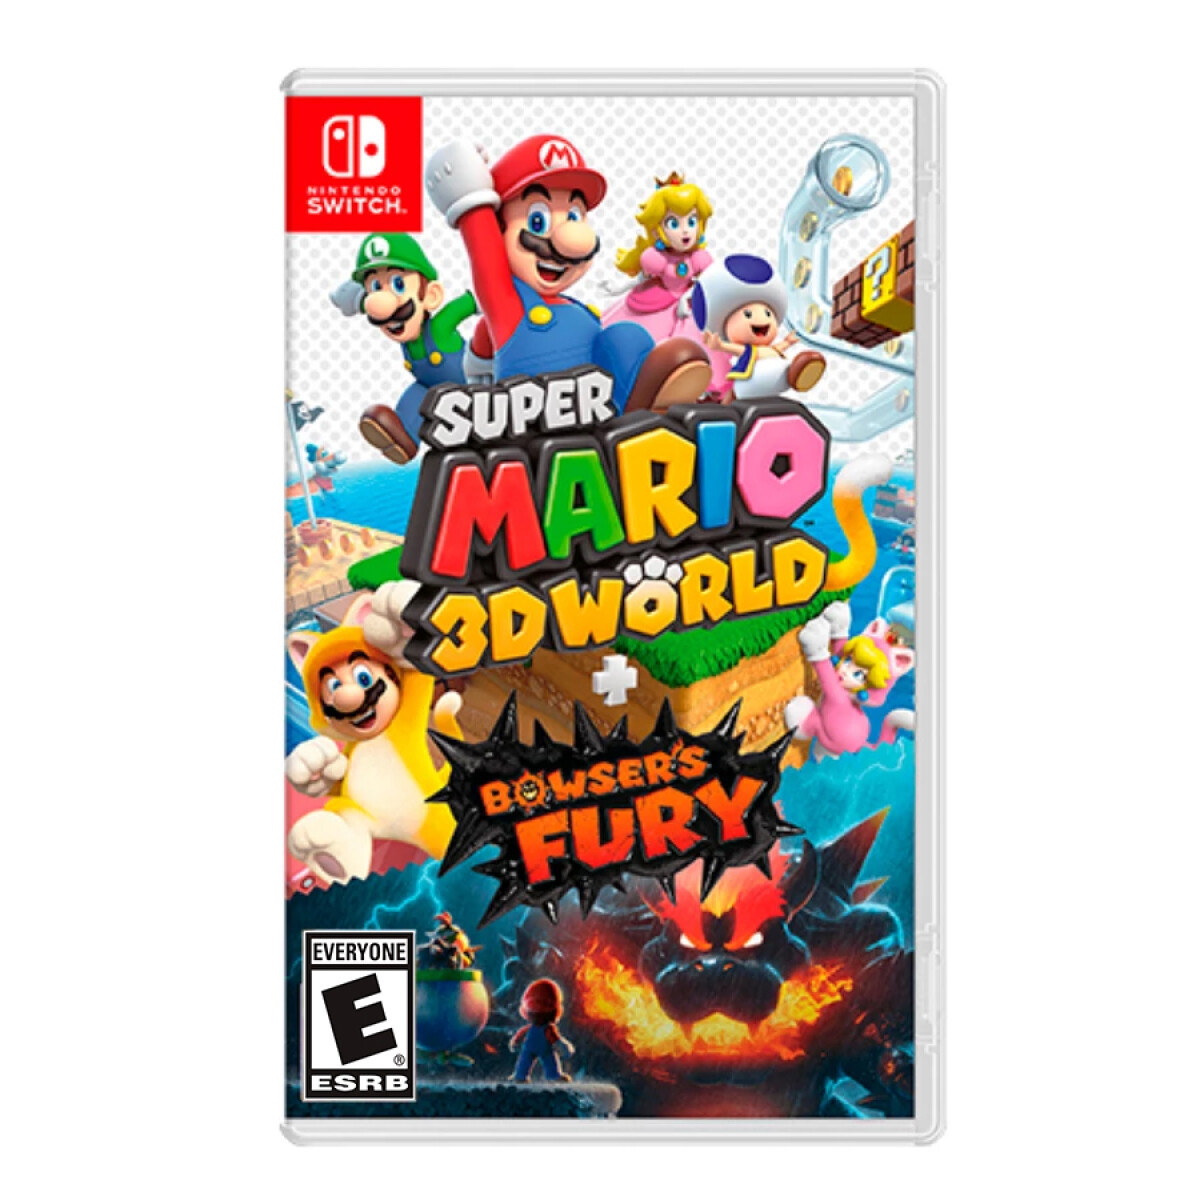 Super Mario 3D World + Bowser's Fury 